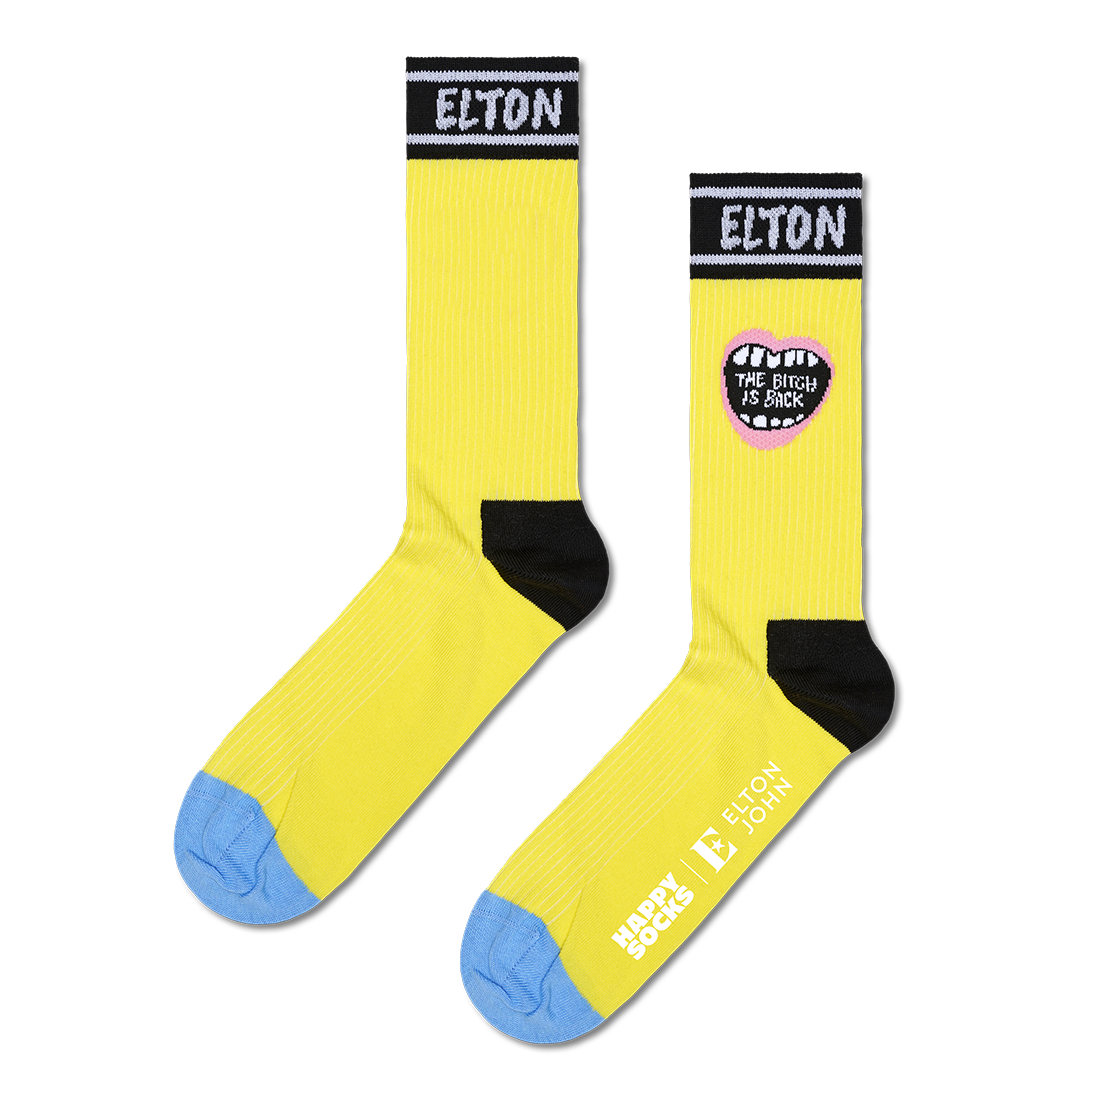 Elton John - Elton John x Happy Socks 6-Pack Gift Set